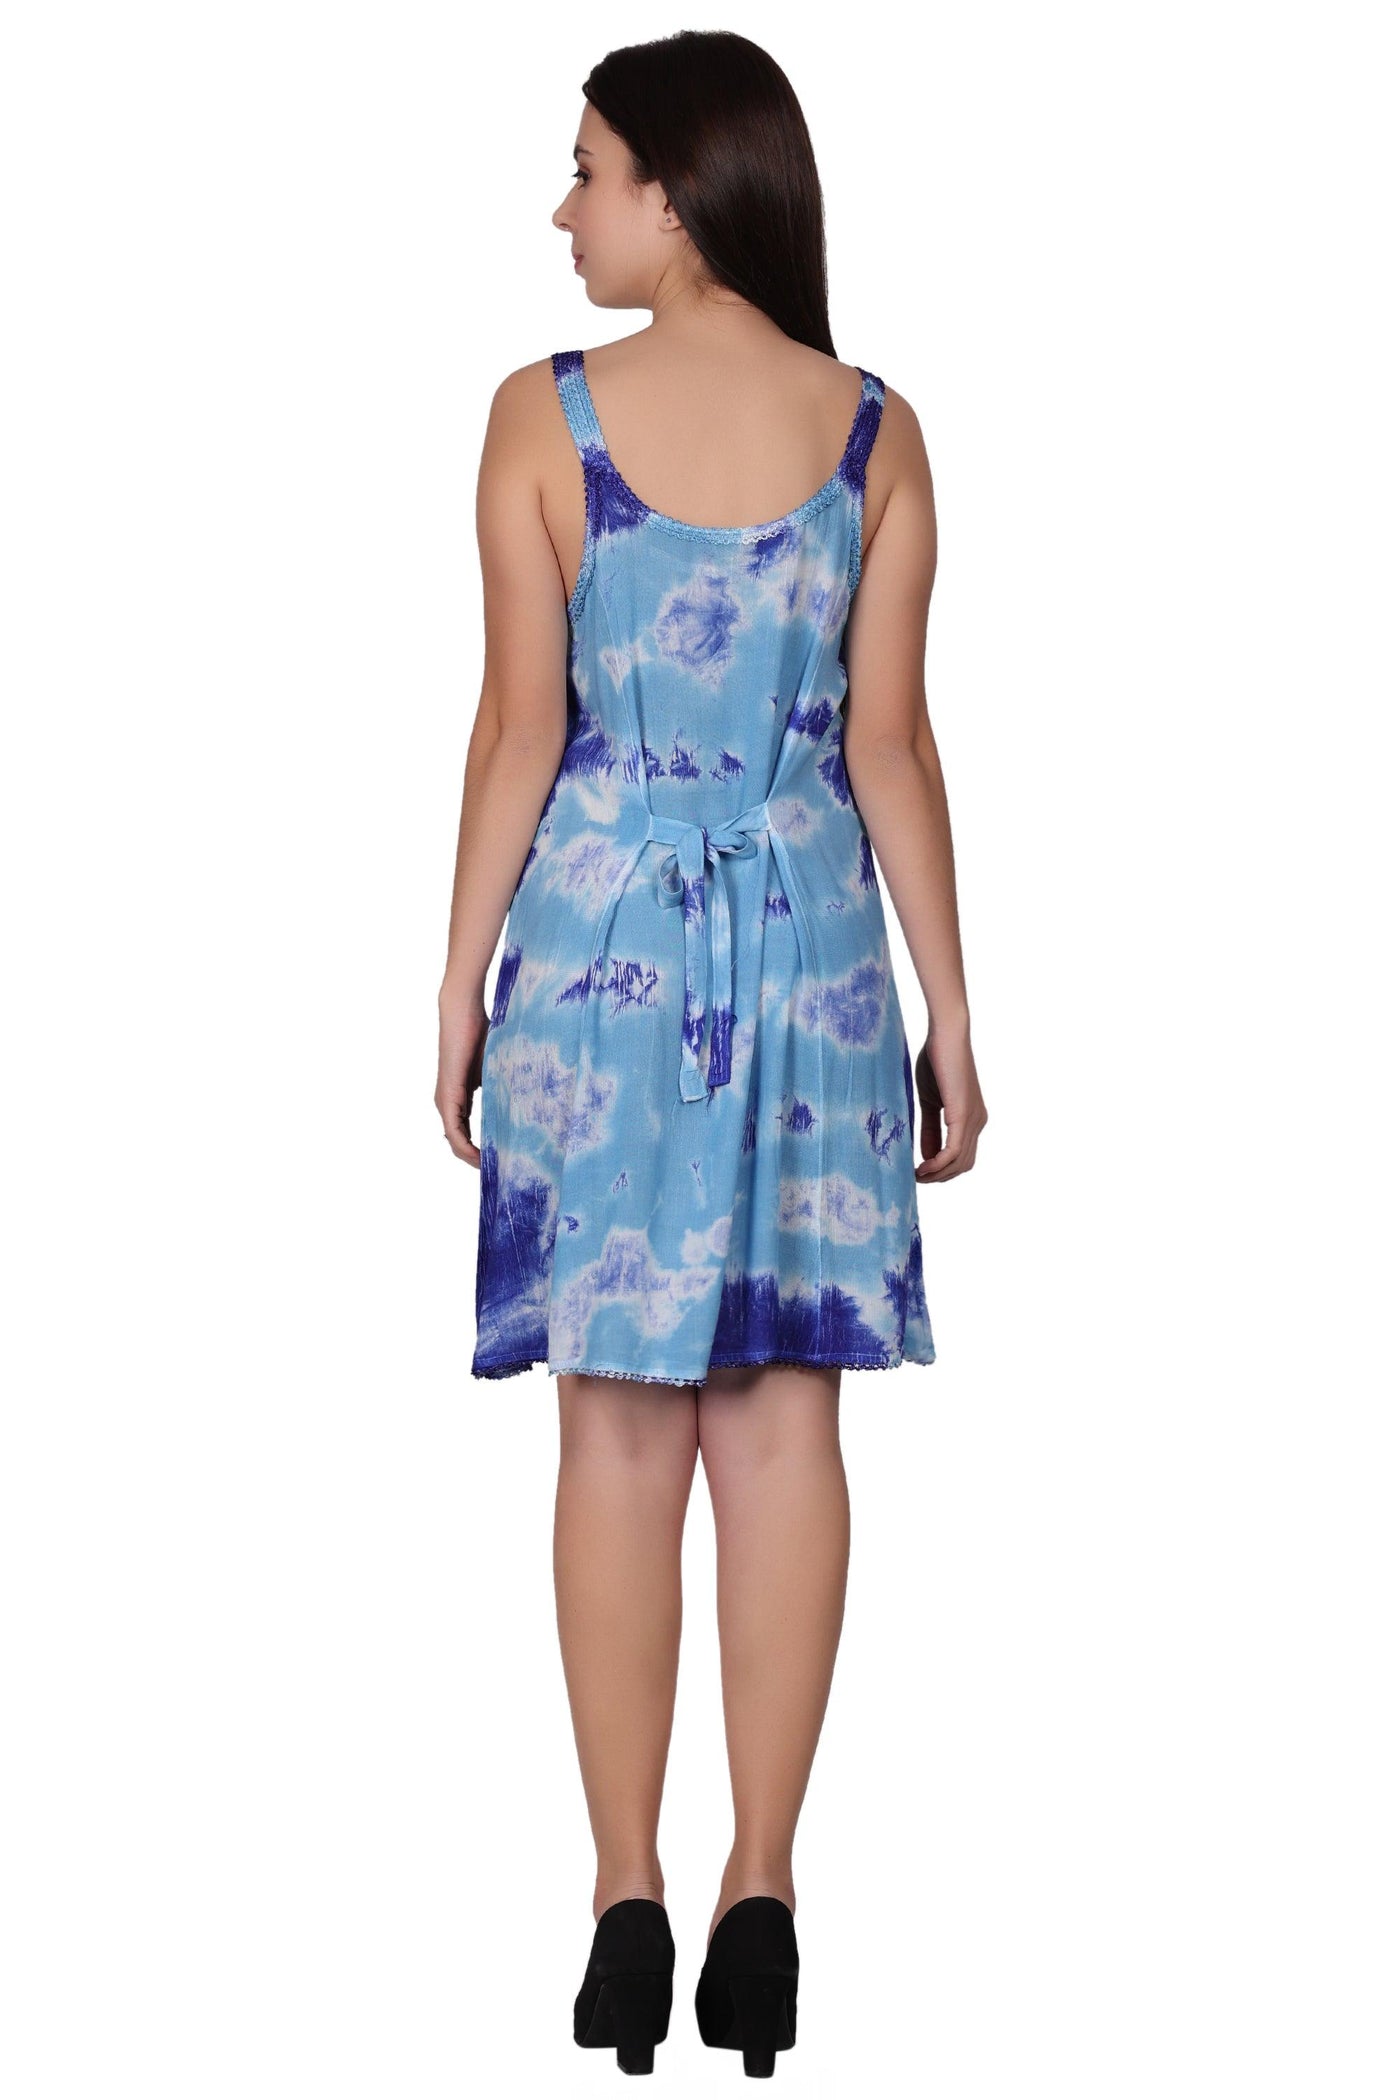 Laced Tie Dye Beach Dress 362213LACE  - Advance Apparels Inc